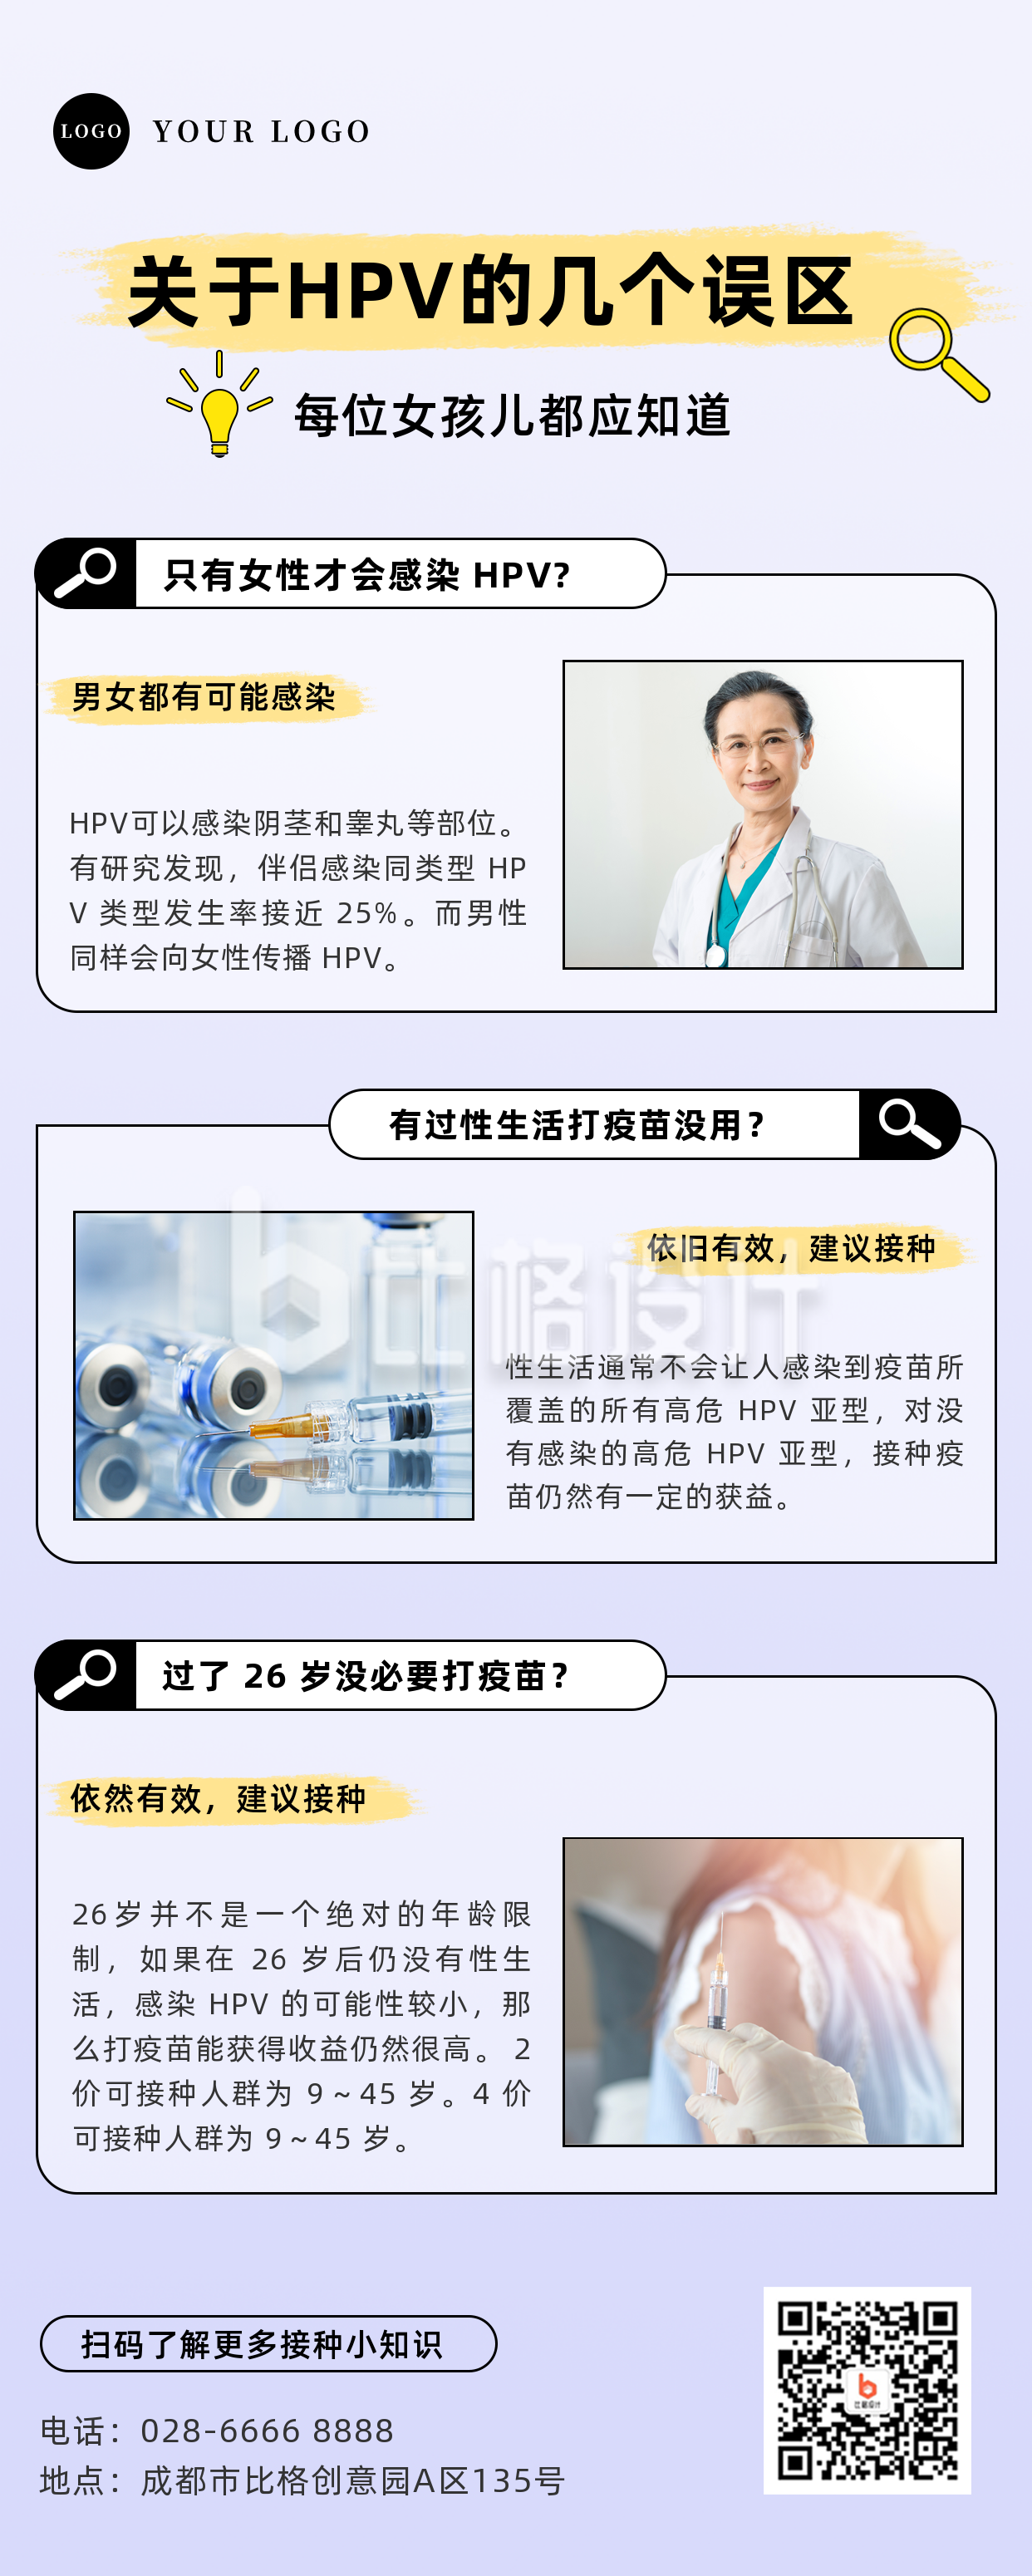 HPV疫苗接种小知识误区长图海报